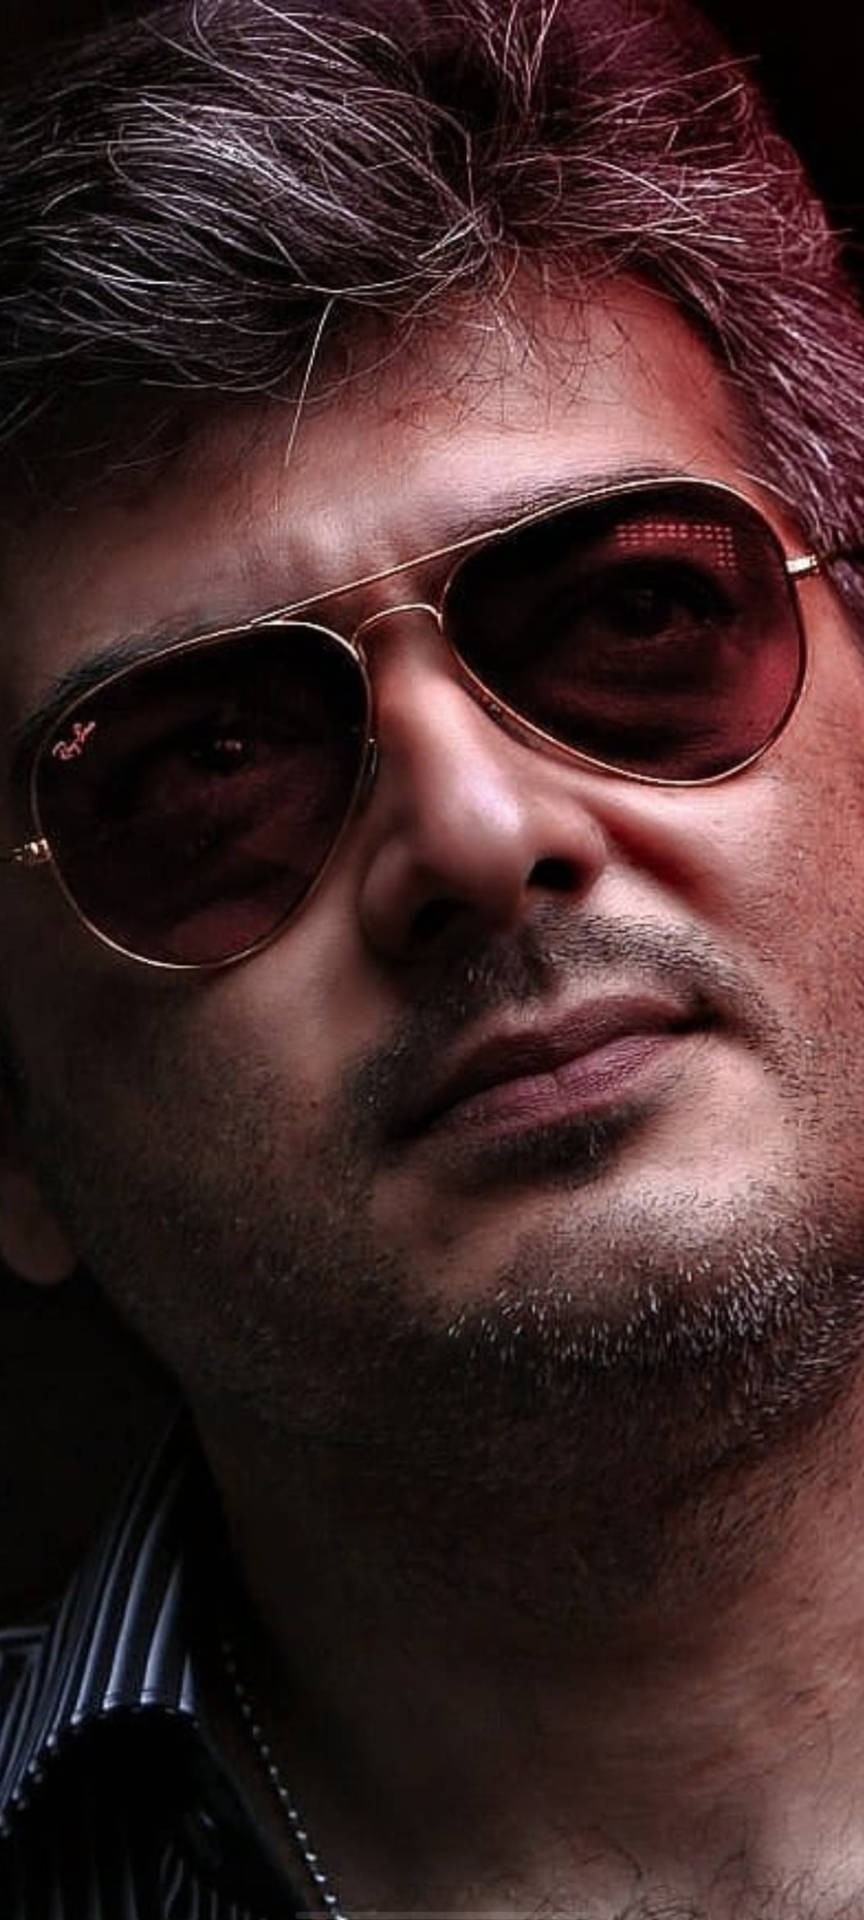 Thala Ajith With Sunglasses Wallpaper